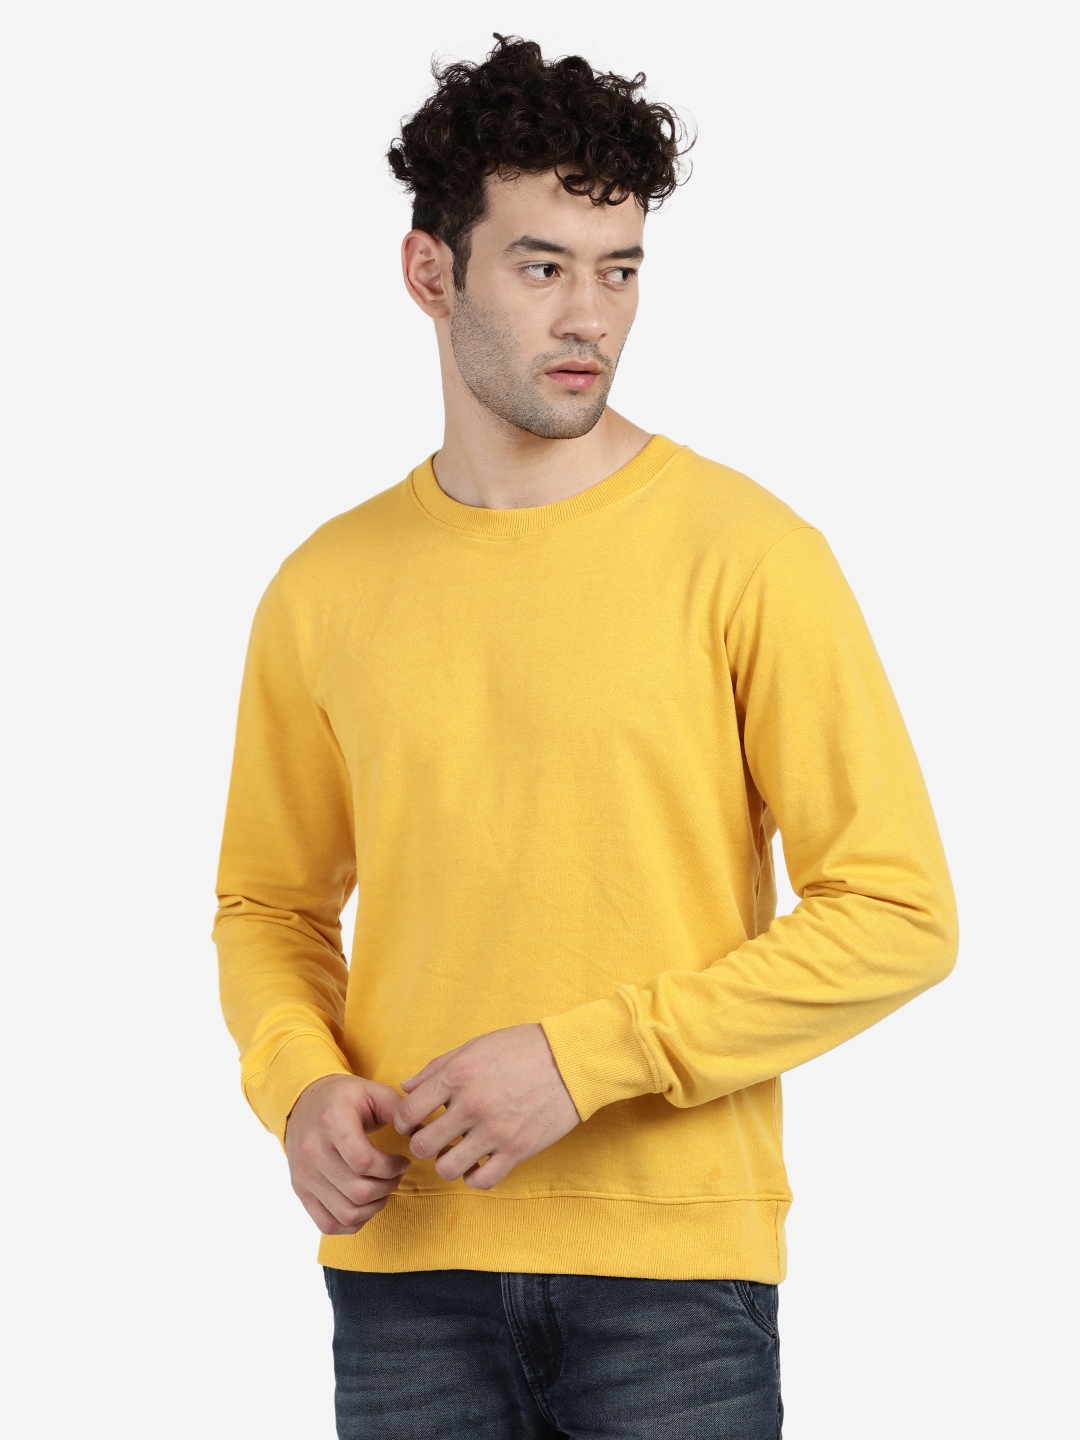 BLACK RADIO Men's Round Neck Solid Yellow Sweatshirt